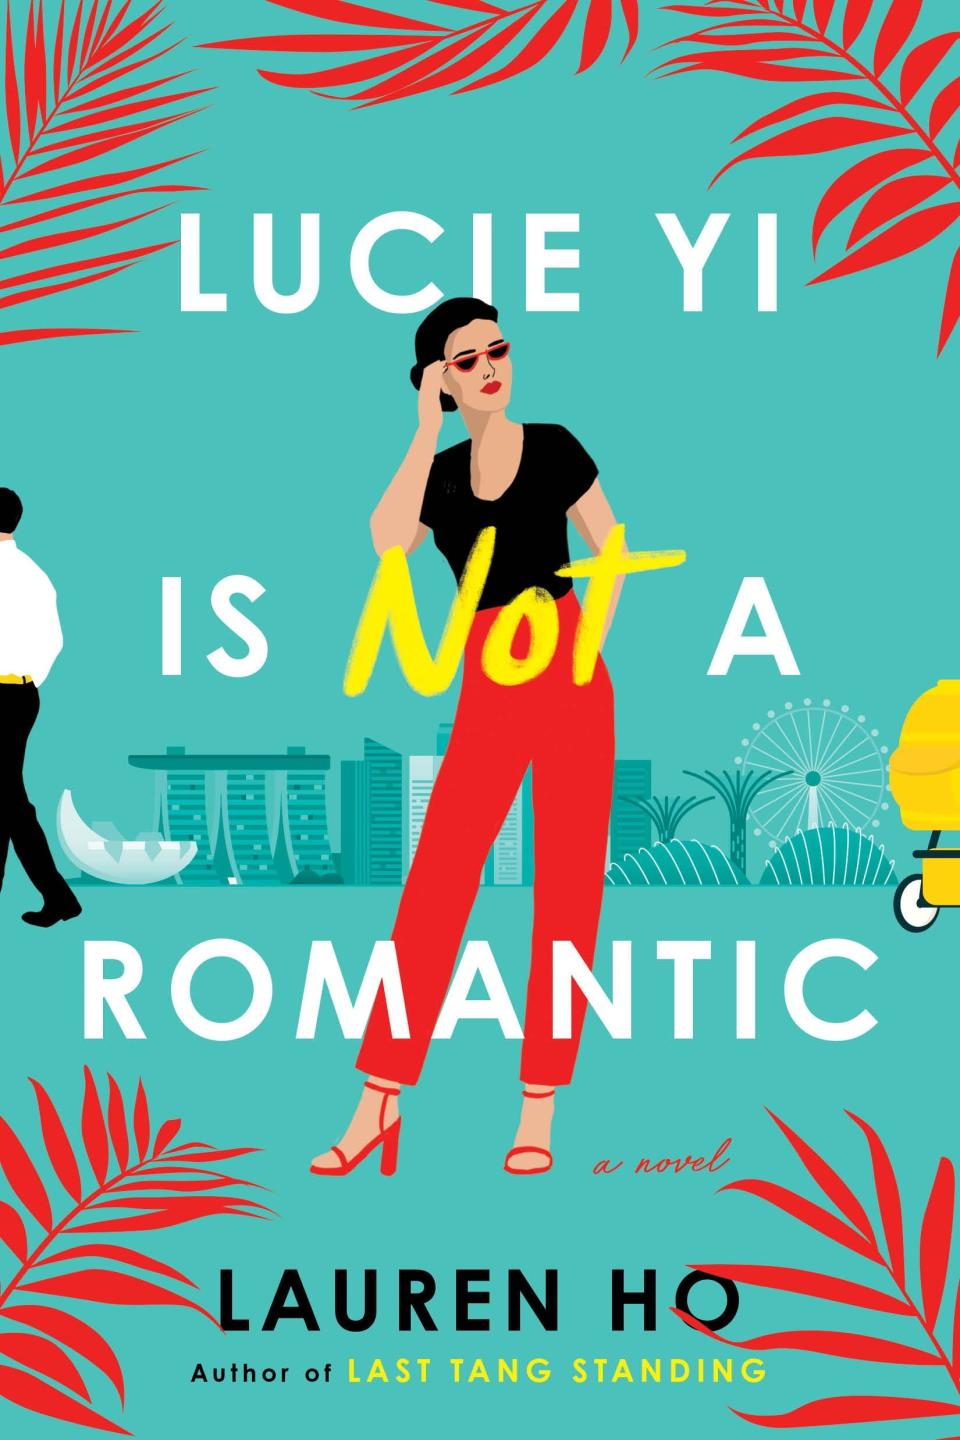 "Lucie Yi Is Not a Romantic," by Lauren Ho